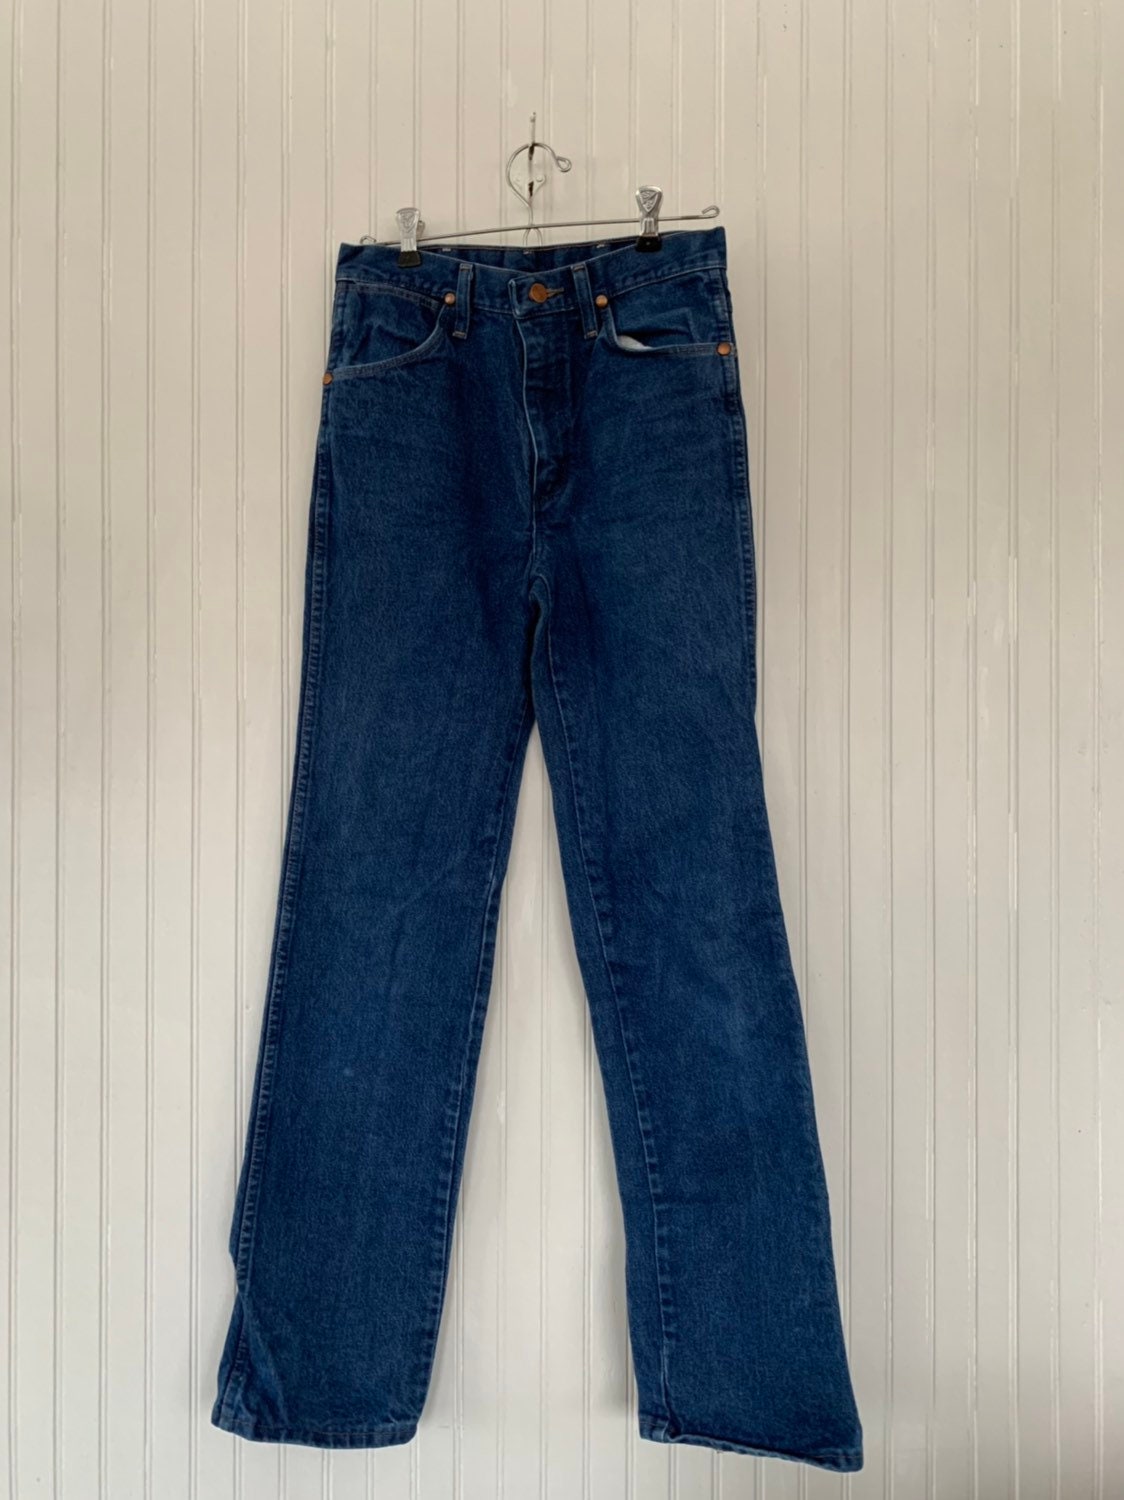 Vintage 90s Wrangler Denim Blue Jeans High Waist Western Mom Jeans Size ...